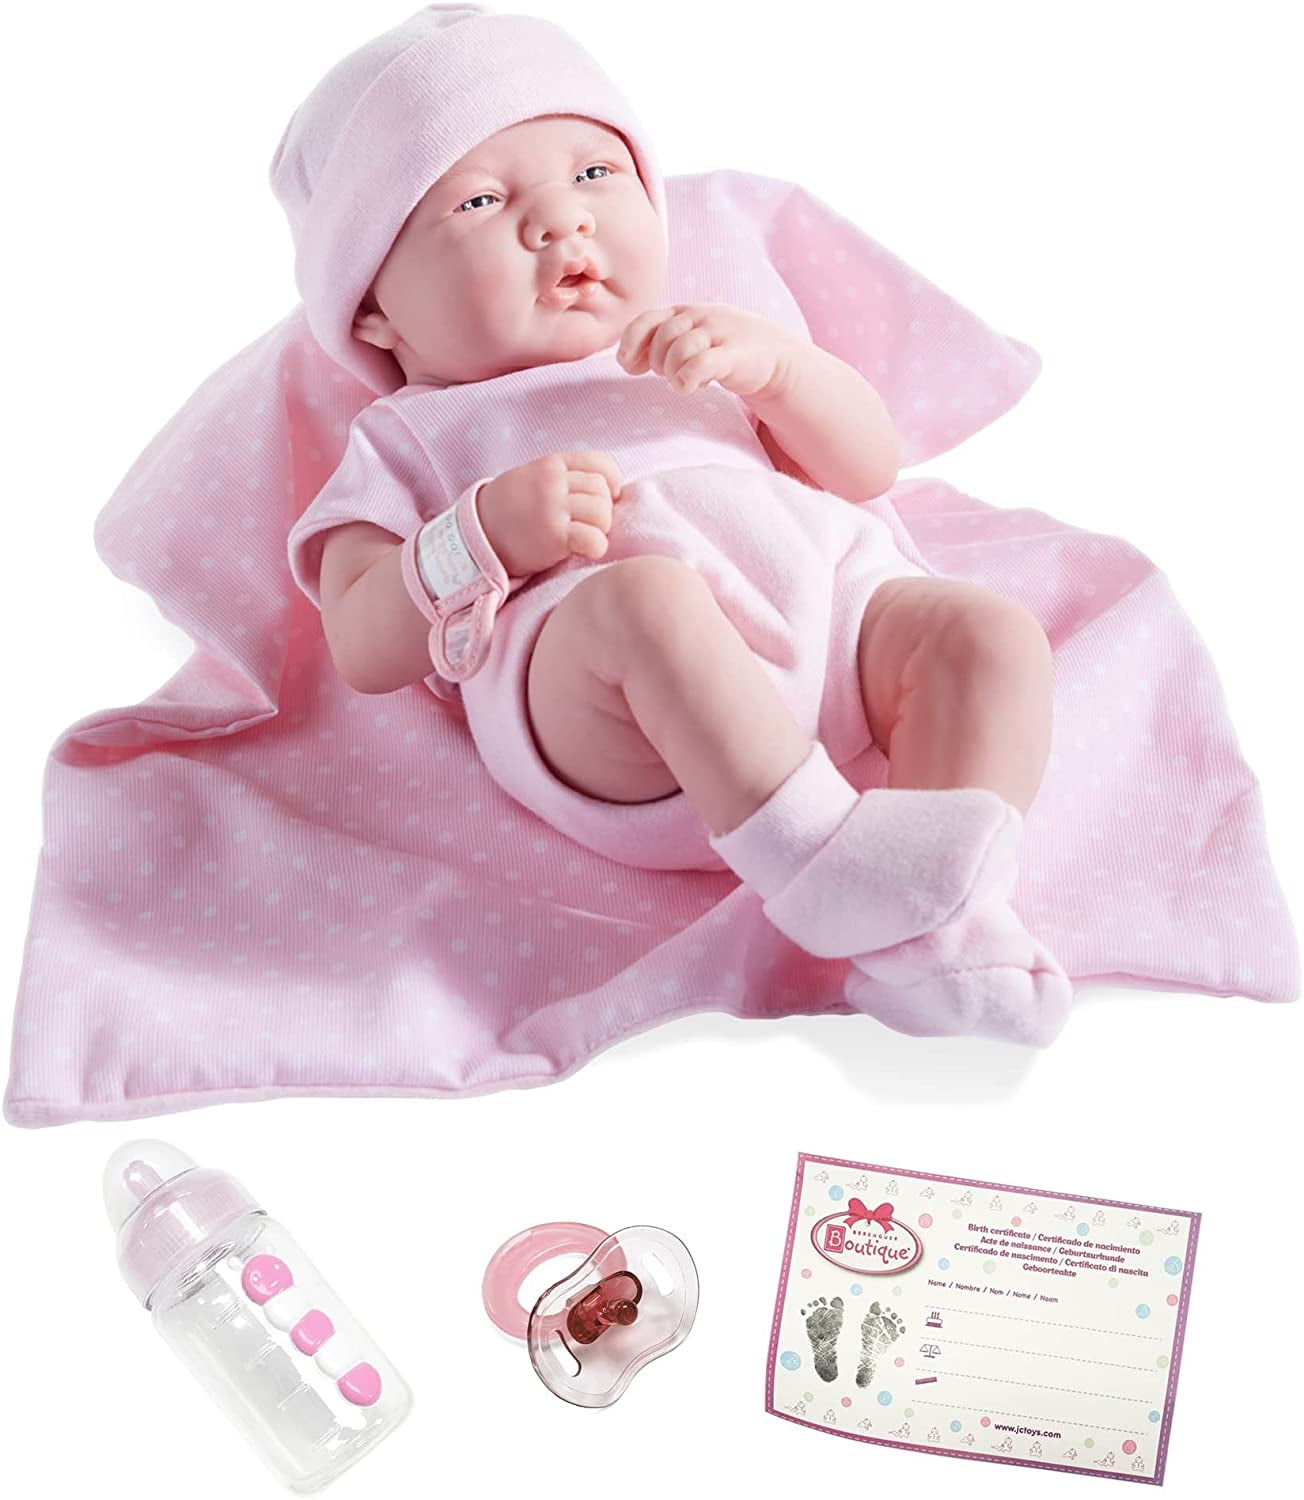 Realistic Newborn BOY Doll 14in Anatomically Correct+Berenguer Birth Certificate 